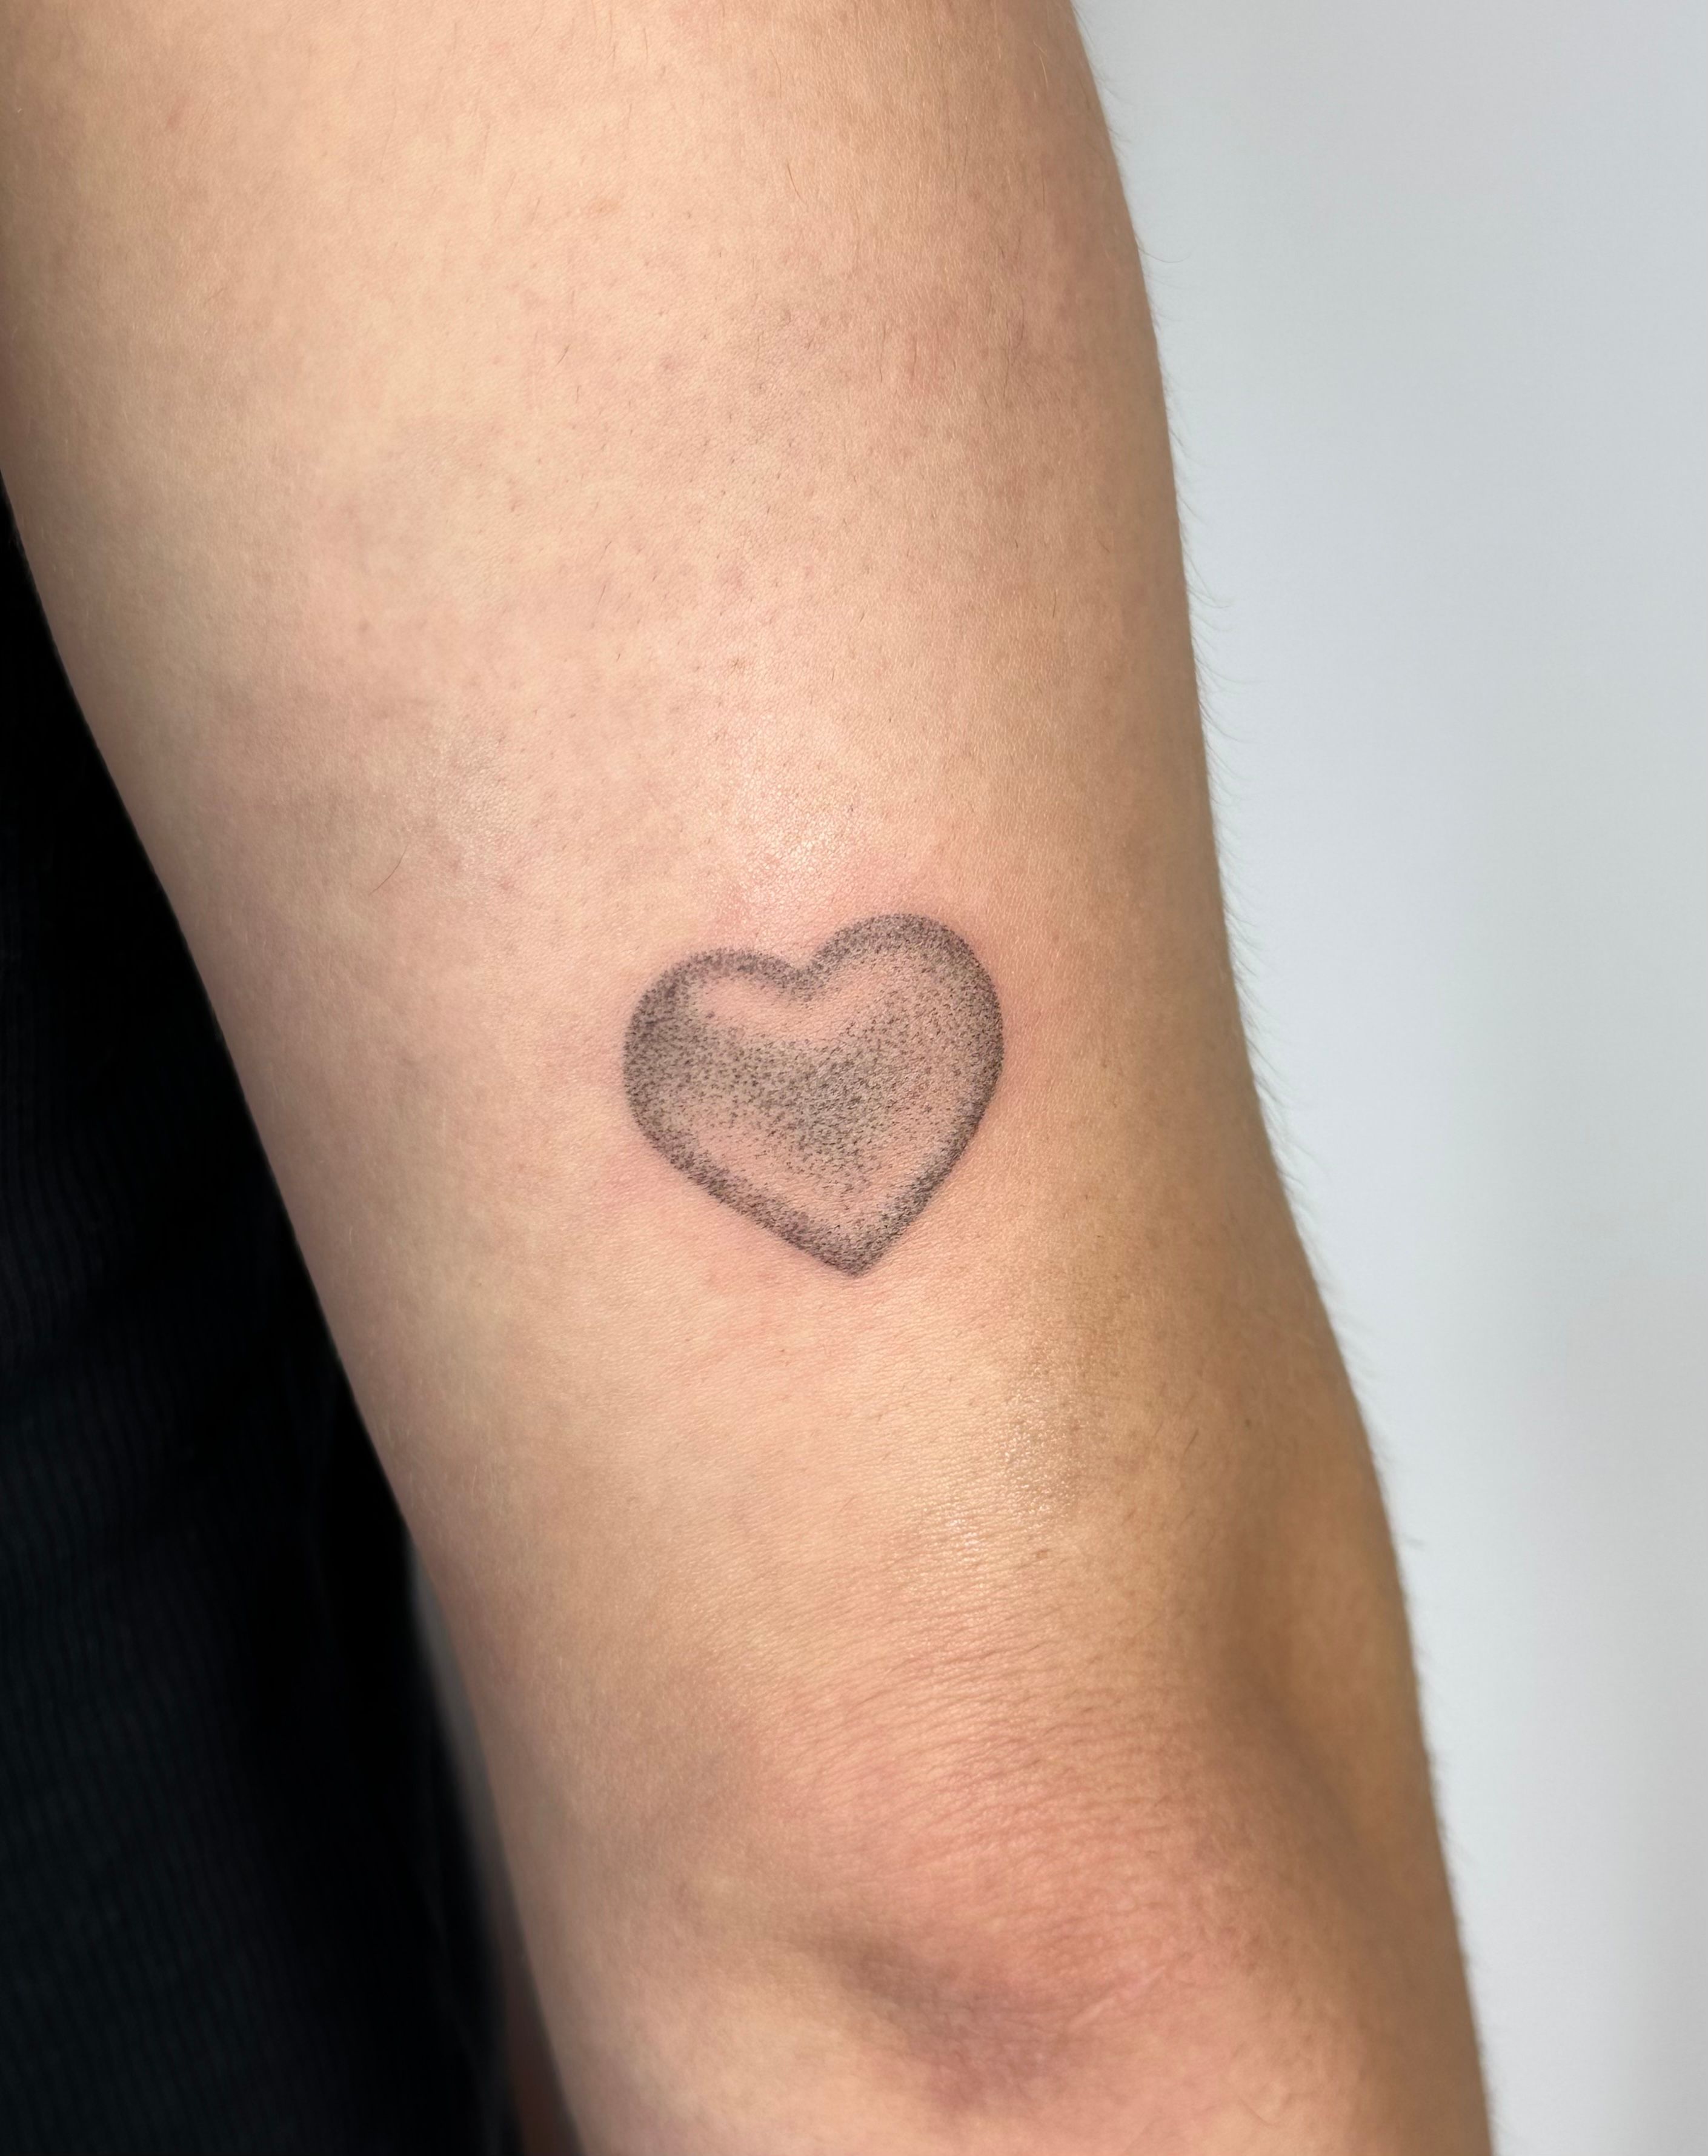 tattooed some cute little hearts that my friends drew on my hip:) :  r/sticknpokes